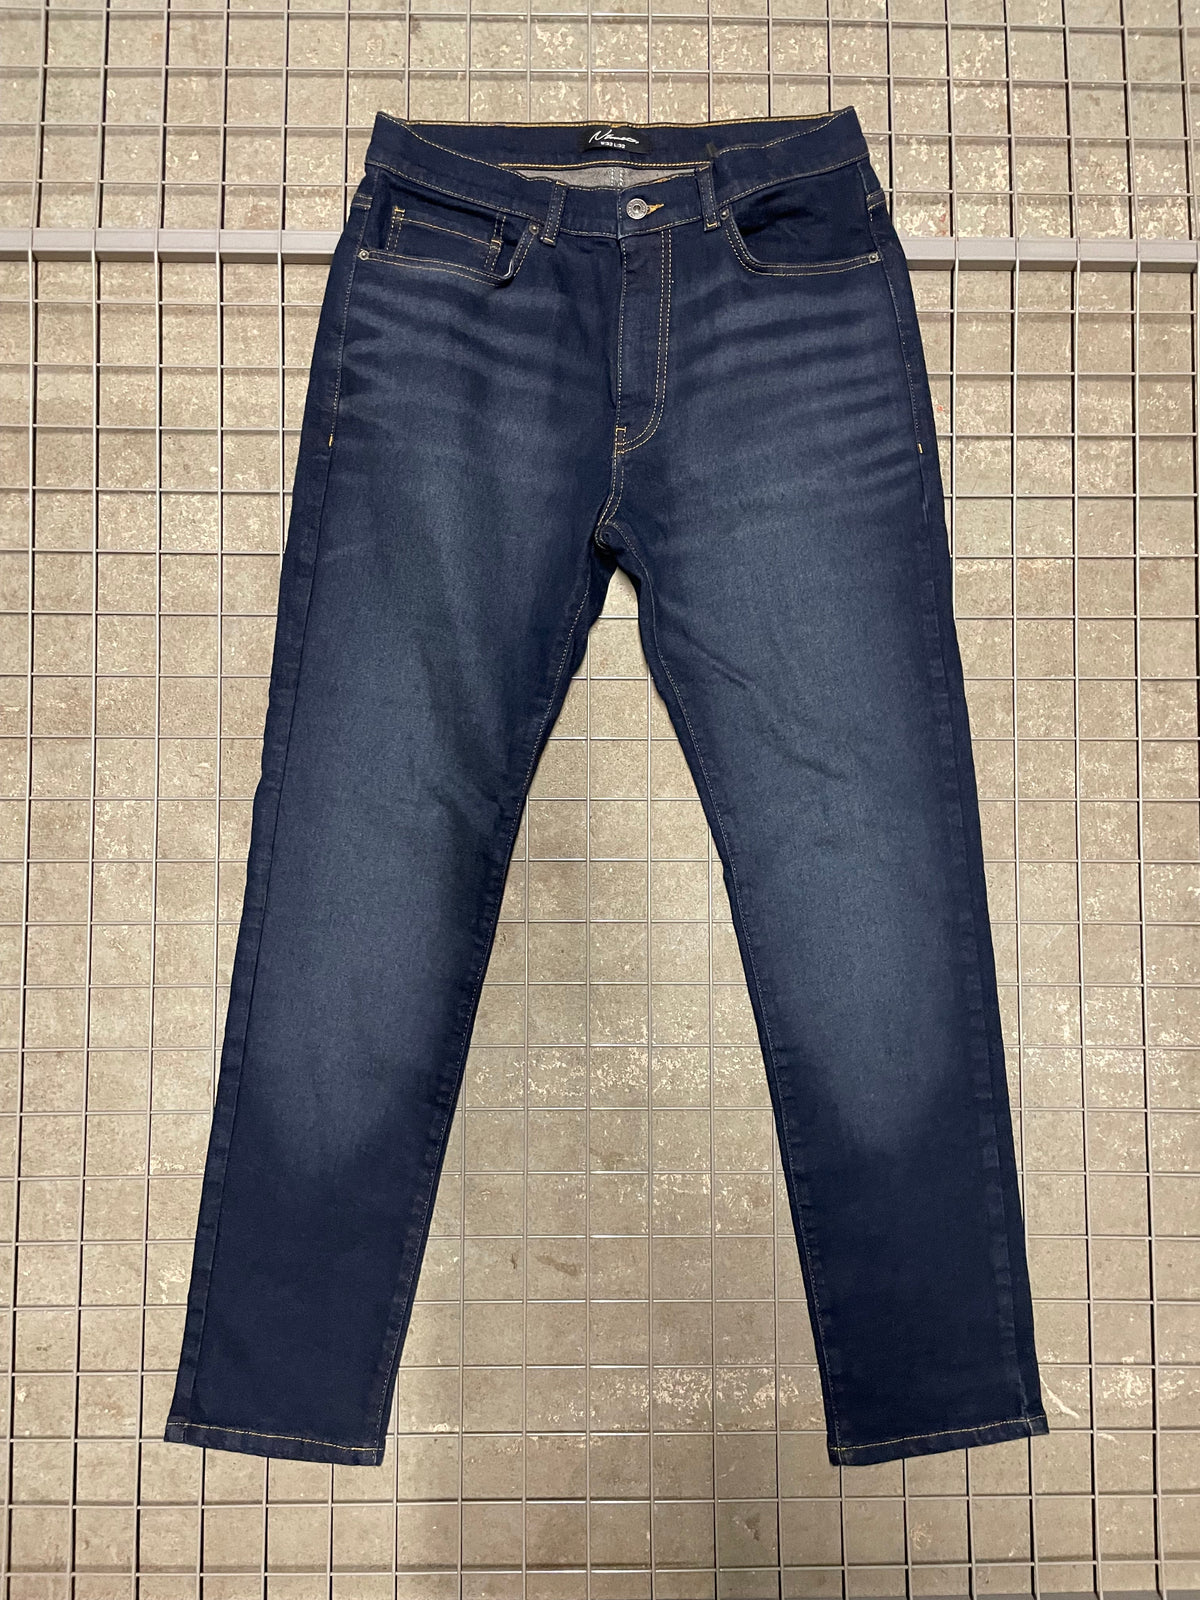 Slim Jeans - Dark Blue Non Ripped (SAMPLE)